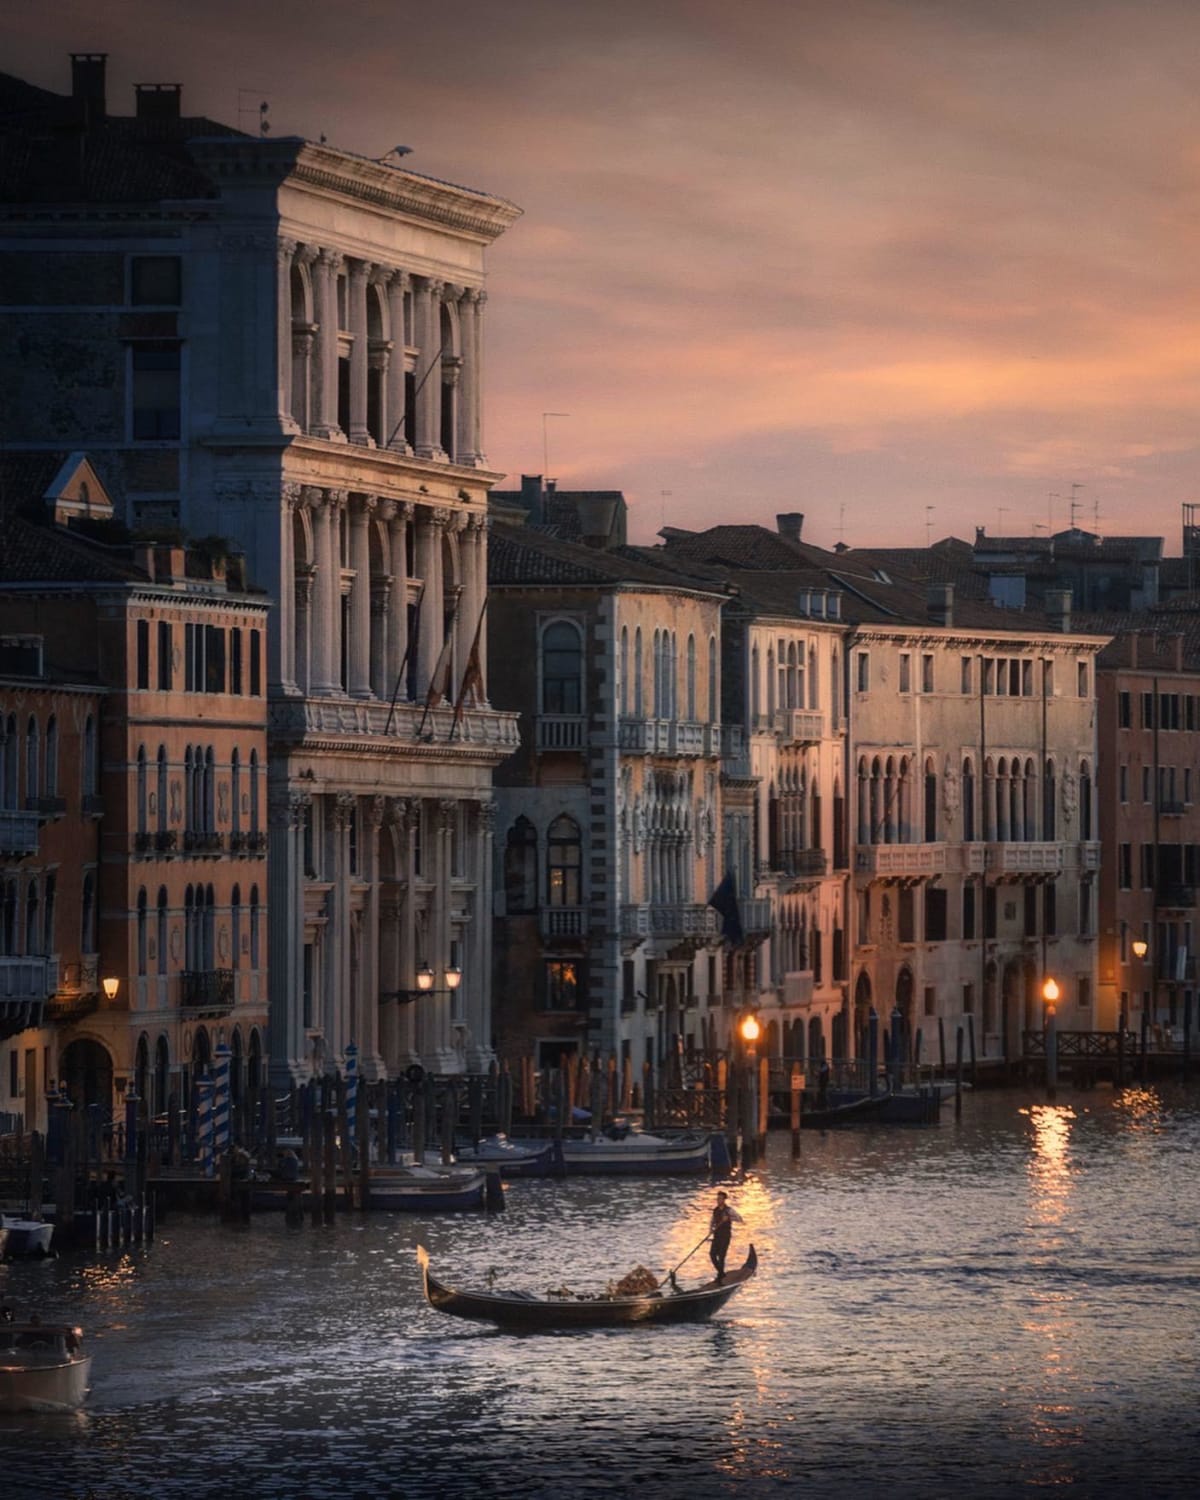 A sunset in Venice [oc]